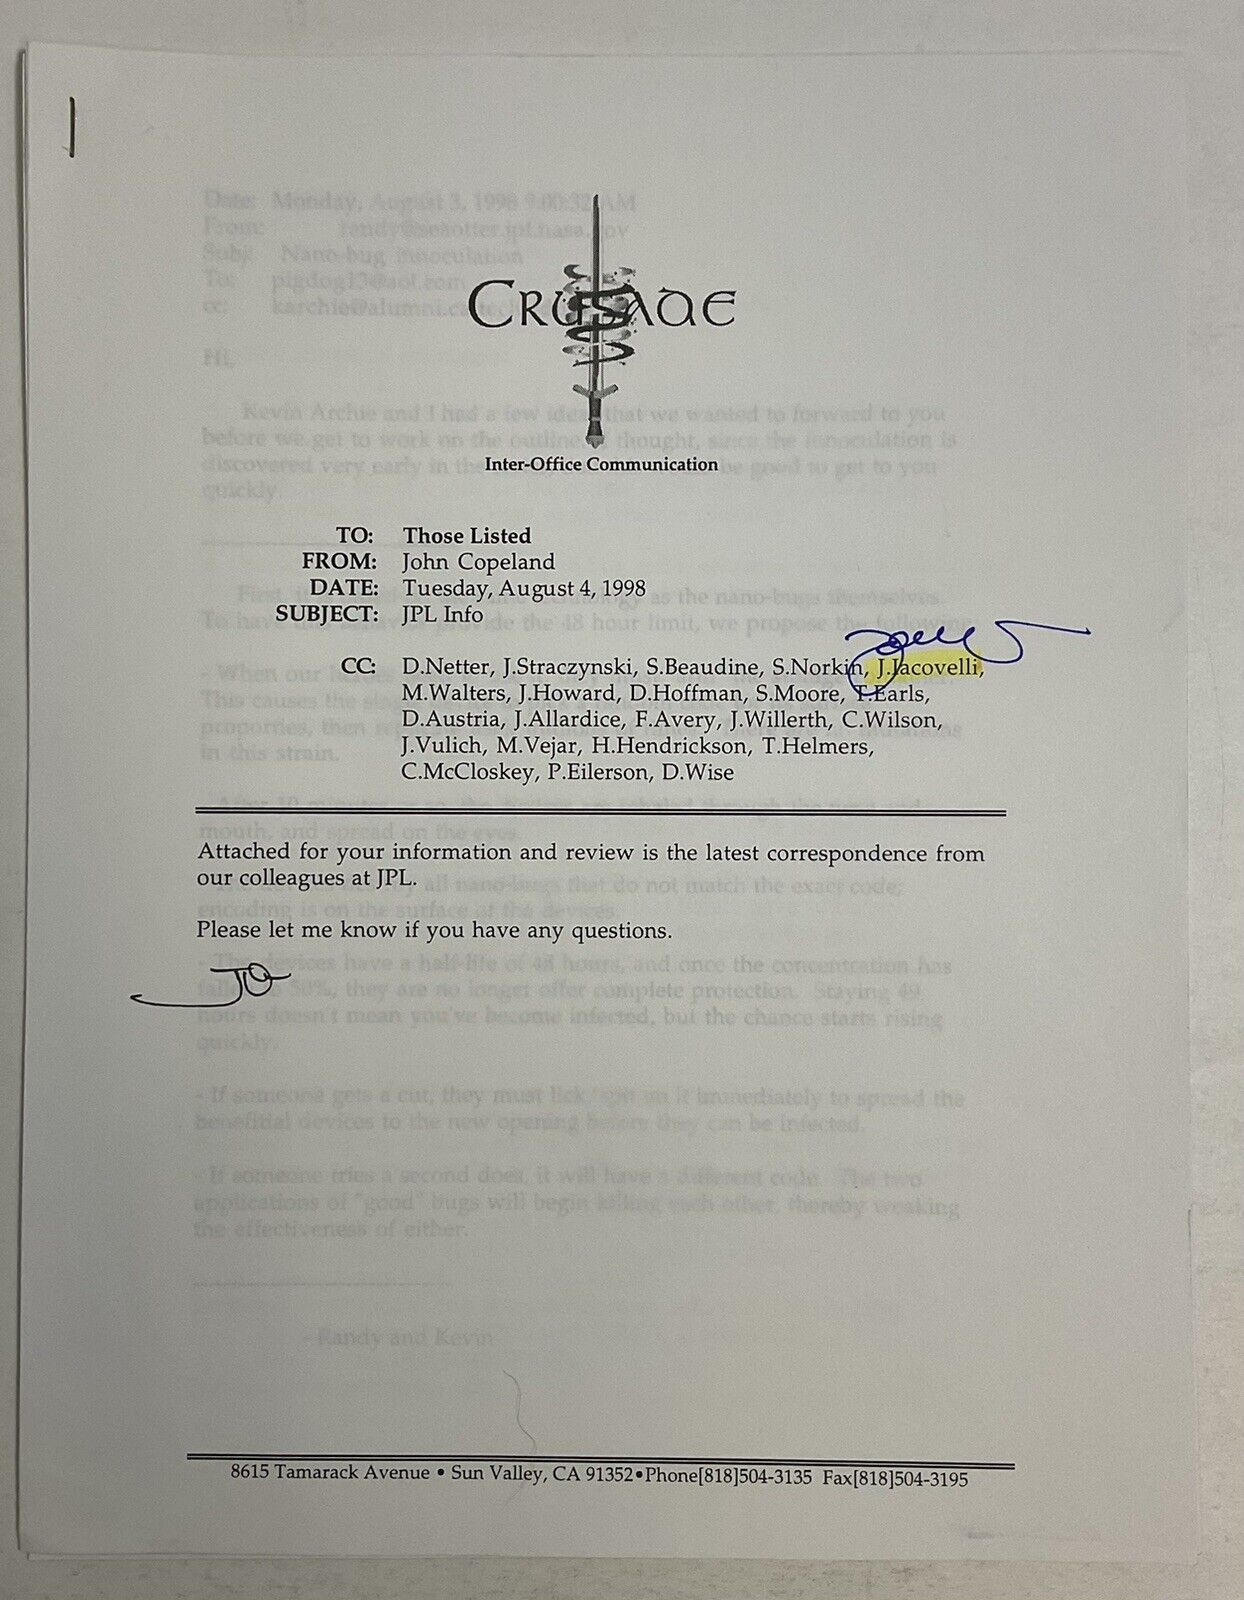 Babylon 5 Crusade Jpl Info Signed Inter-office Communication Oct 22, 1998